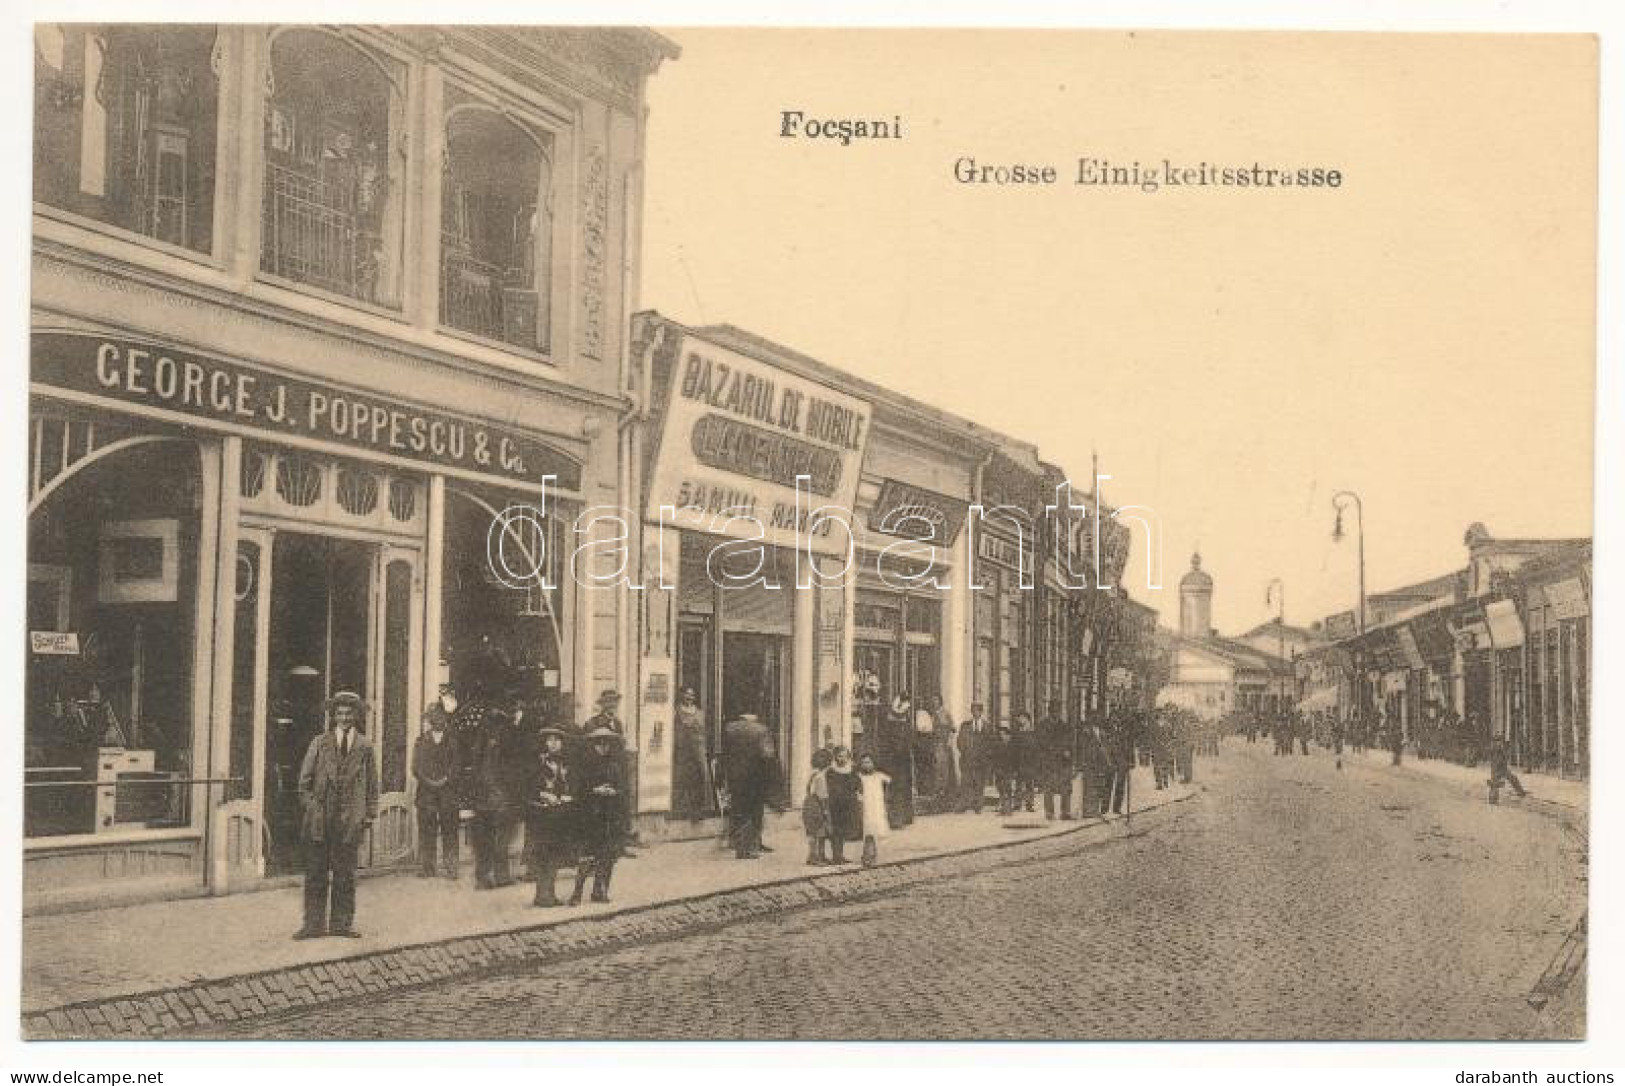 ** T1 Focsani, Foksány (Moldavia); Grosse Einigkeitstrasse / Bazarul De Mobile La Centrala Samuil Marcu, George J. Poppe - Unclassified